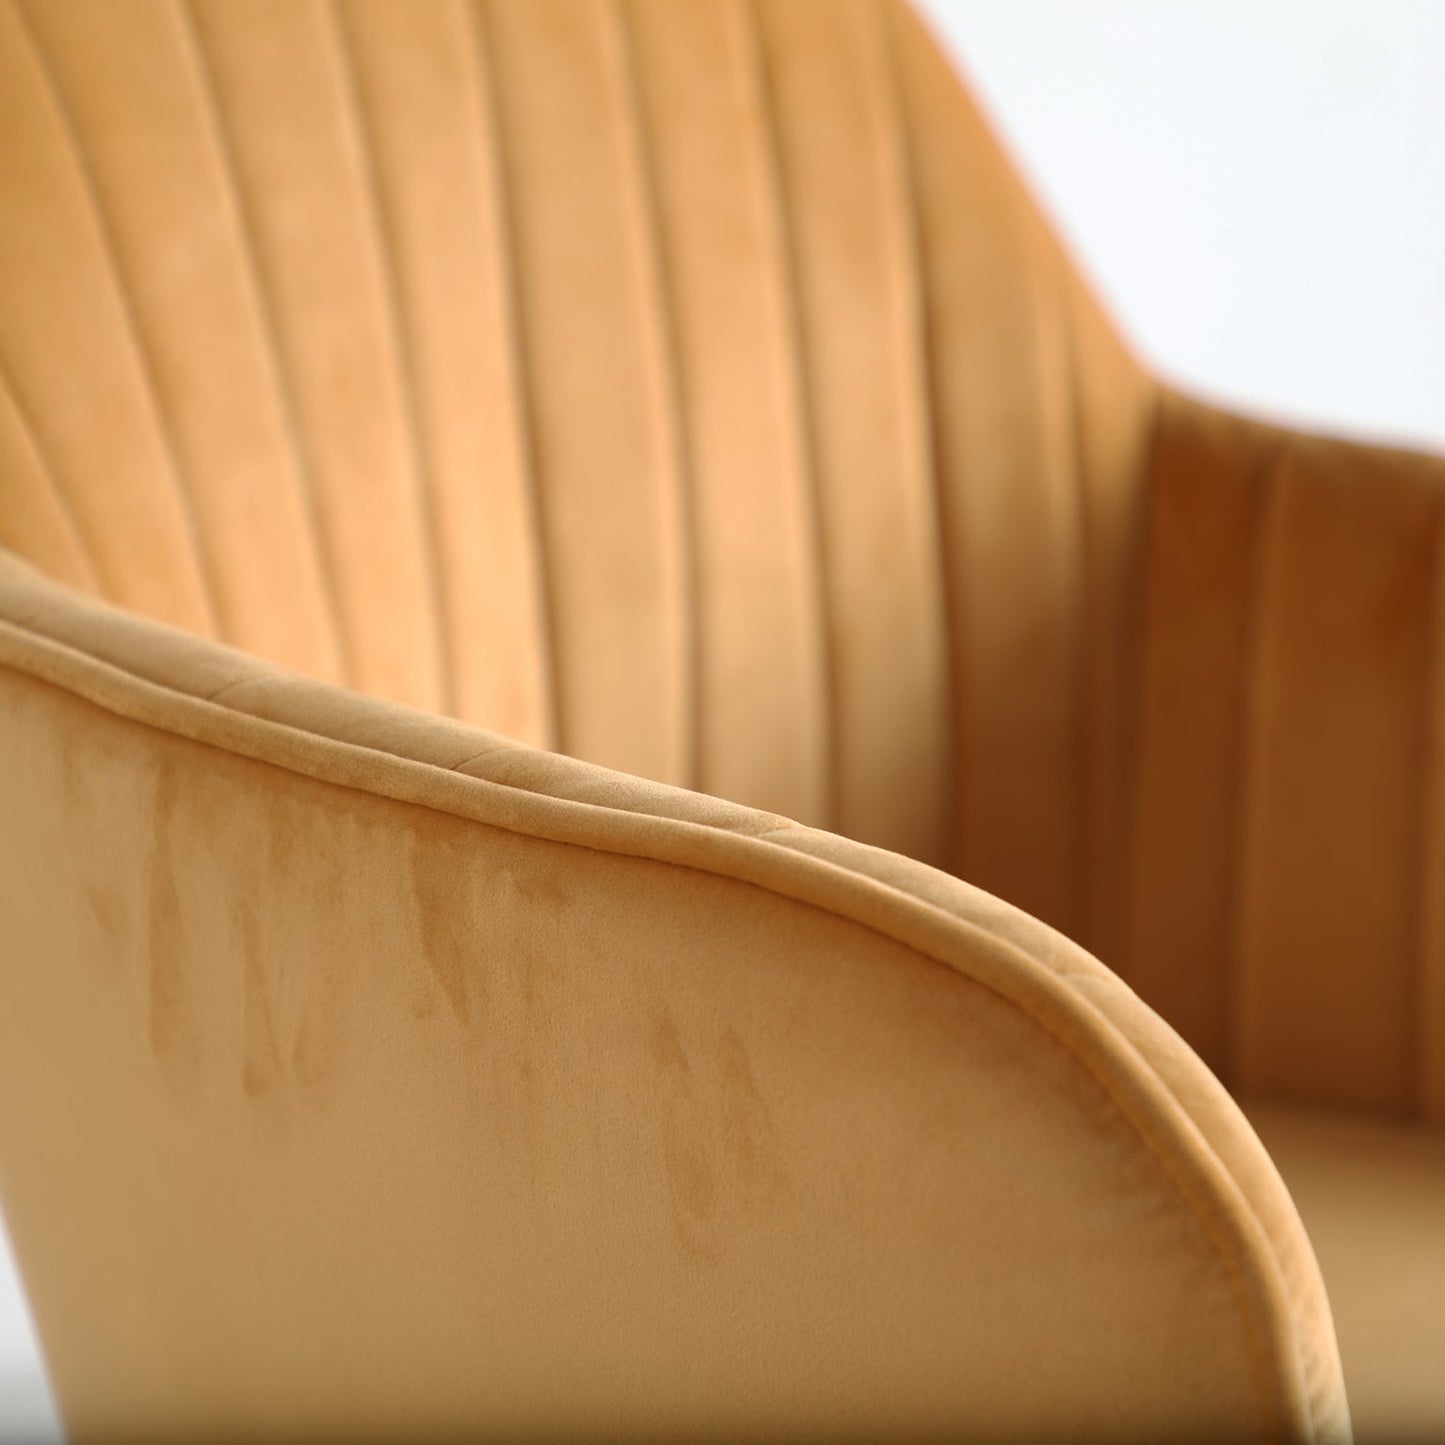 Calci Chair in Mustard Colour